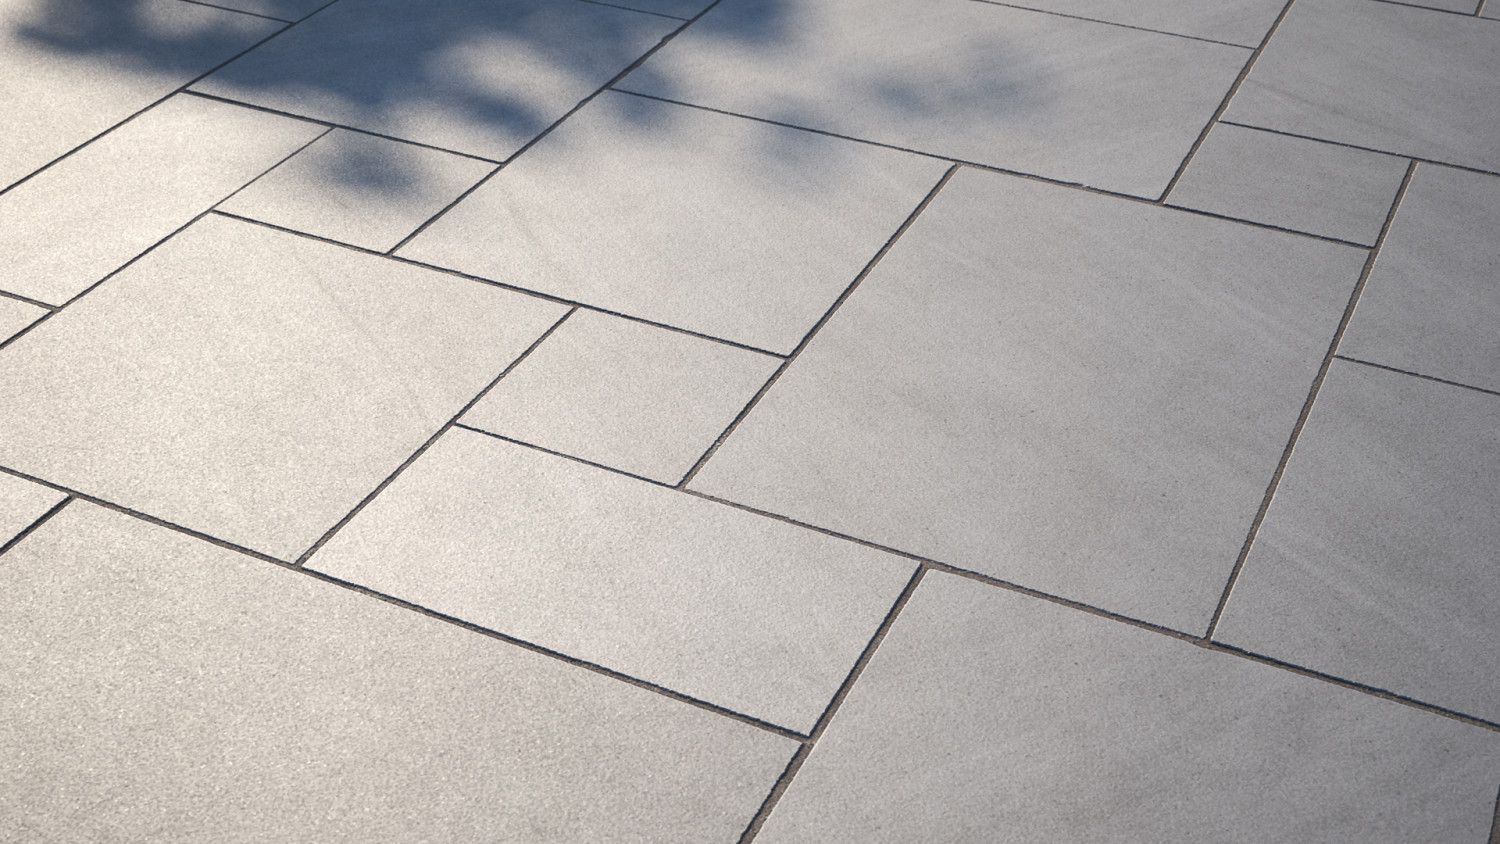 Smooth square stone paving texture